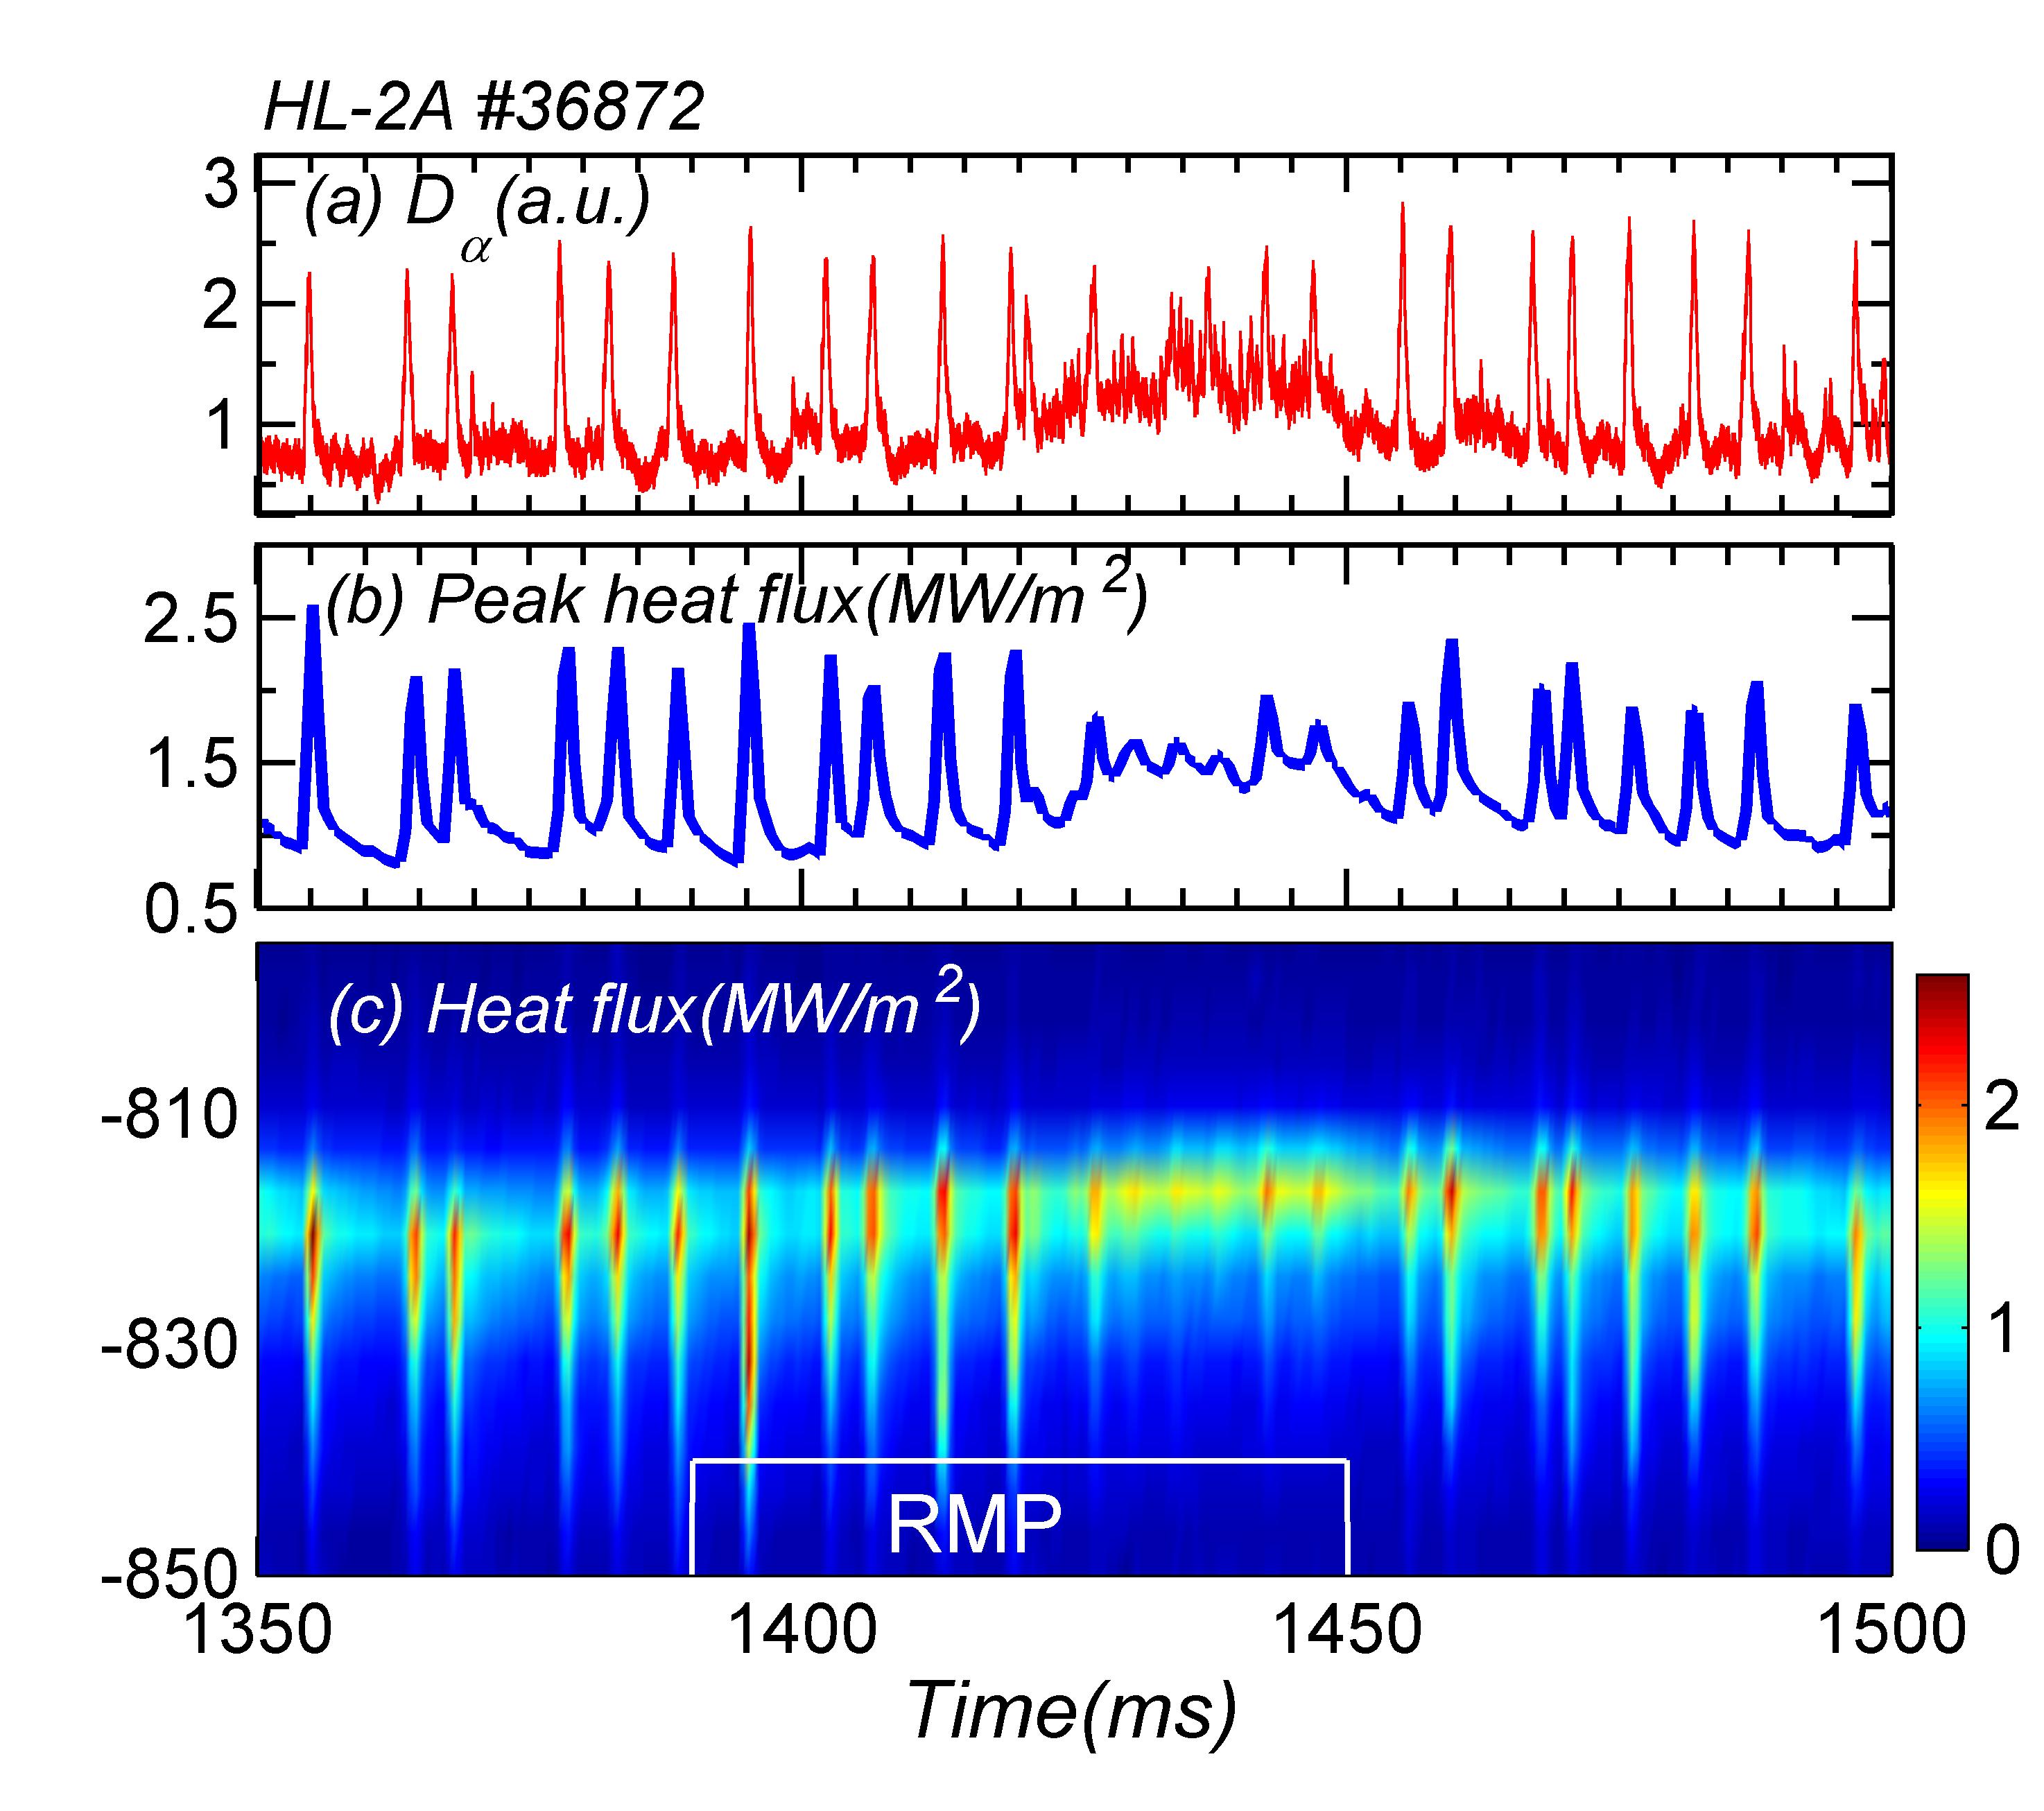 Time evolutions of (a)divertor D$_{\alpha}$signal, (b) peak heat flux, (c) heat flux profiles during ELM crash and ELMs mitigation phase